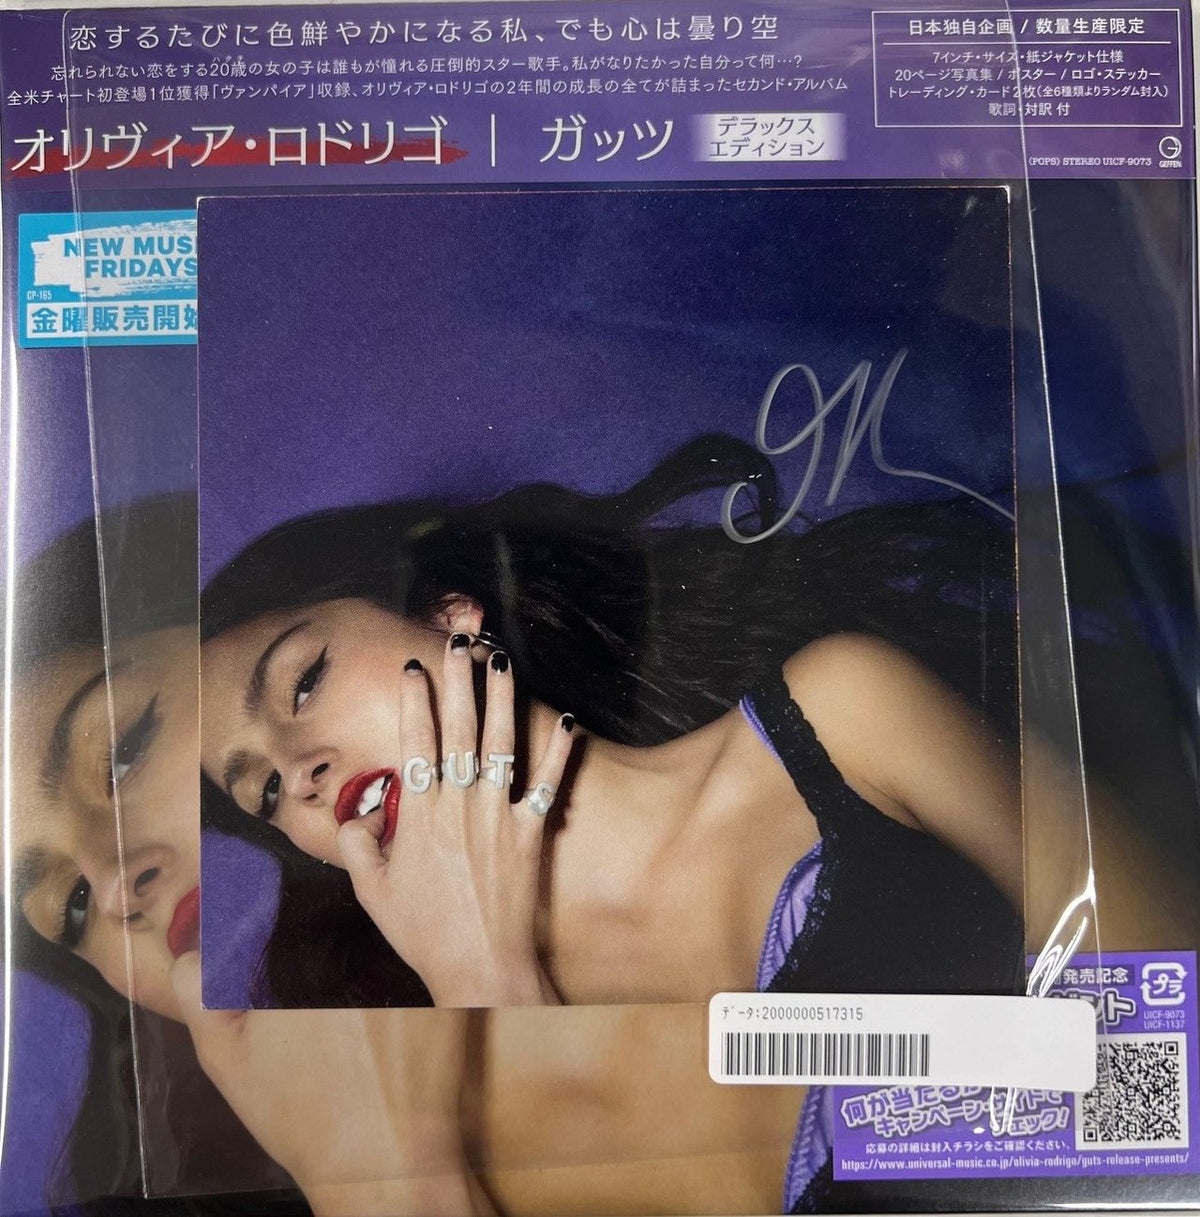 Olivia Rodrigo Guts - Deluxe Edition 7-Inch Sleeve + Autographed Photo Card  Japanese CD album